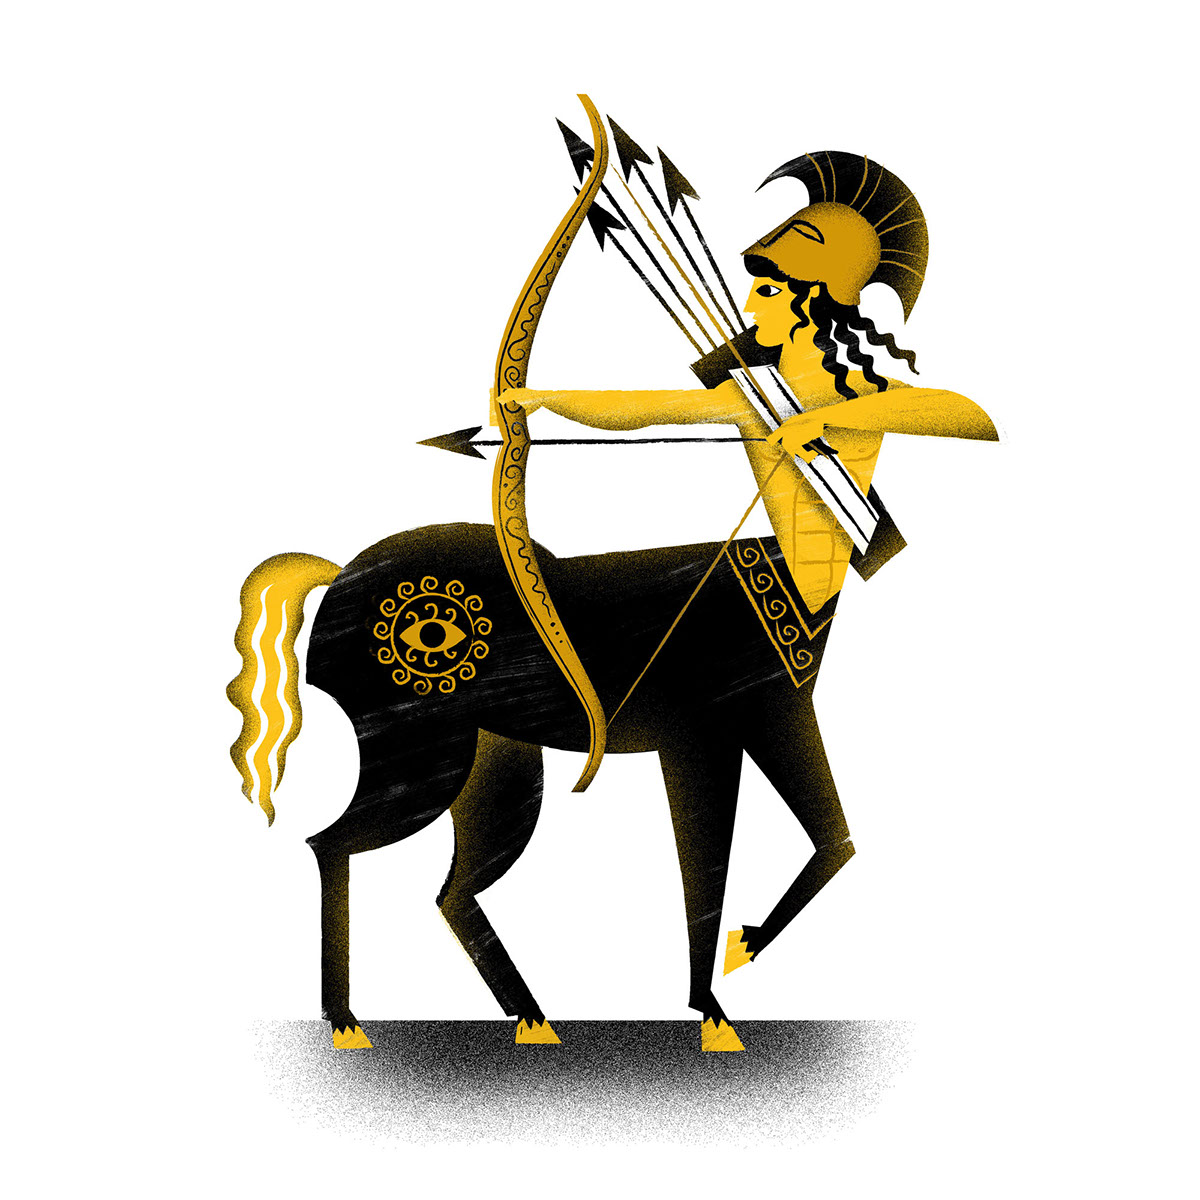 greek greeks griegos mitologia troya Troy medussa Centauro Guerrero warrior Centaur mythology